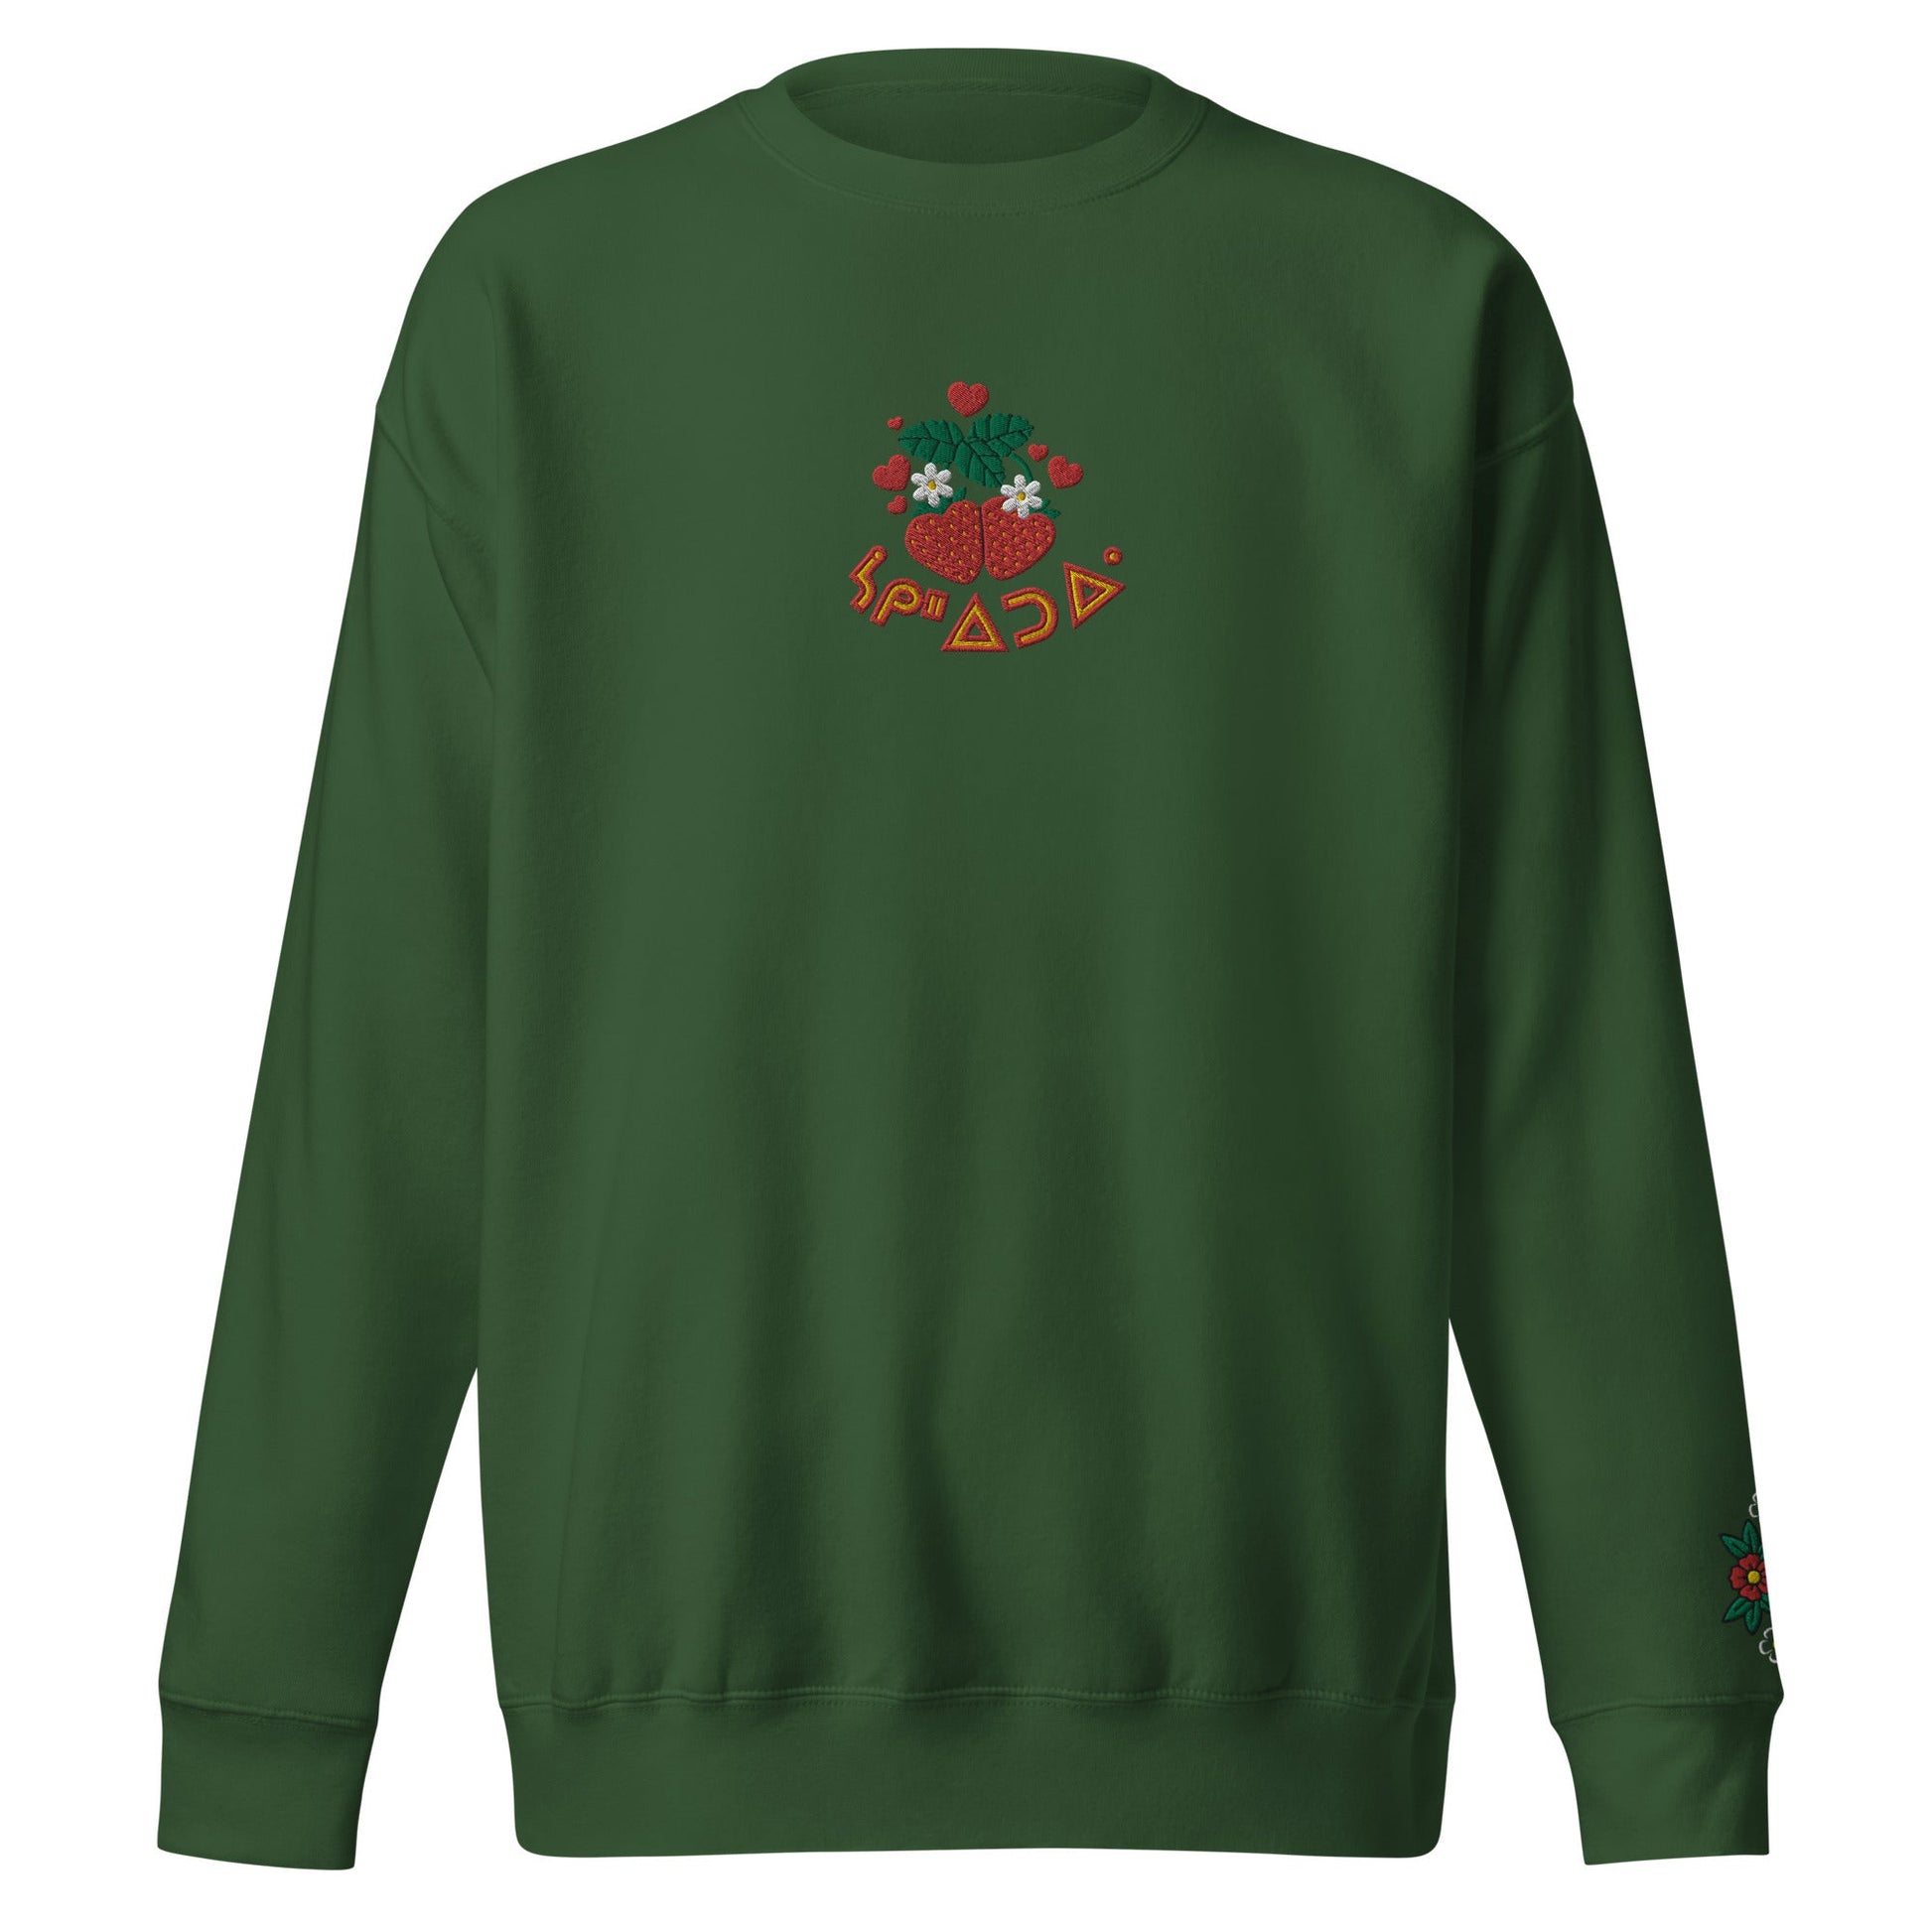 Cree Being In Love Embroidered Premium Sweatshirt - Nikikw Designs